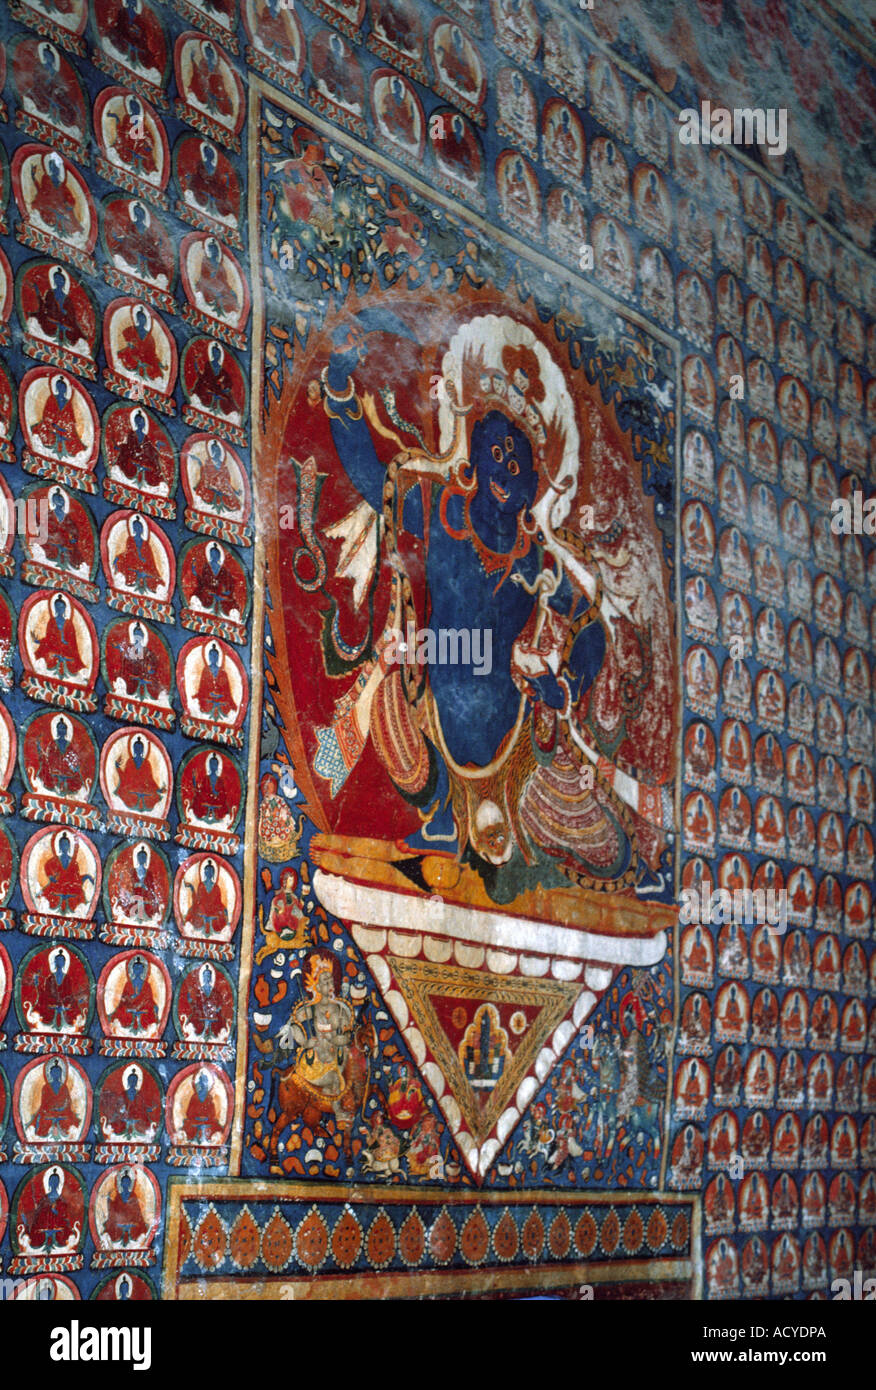 WALL FRESCO of a BUDDHIST DEITY wrathful incarnation in ALCHI GOMPA monastery LADAKH INDIA Stock Photo